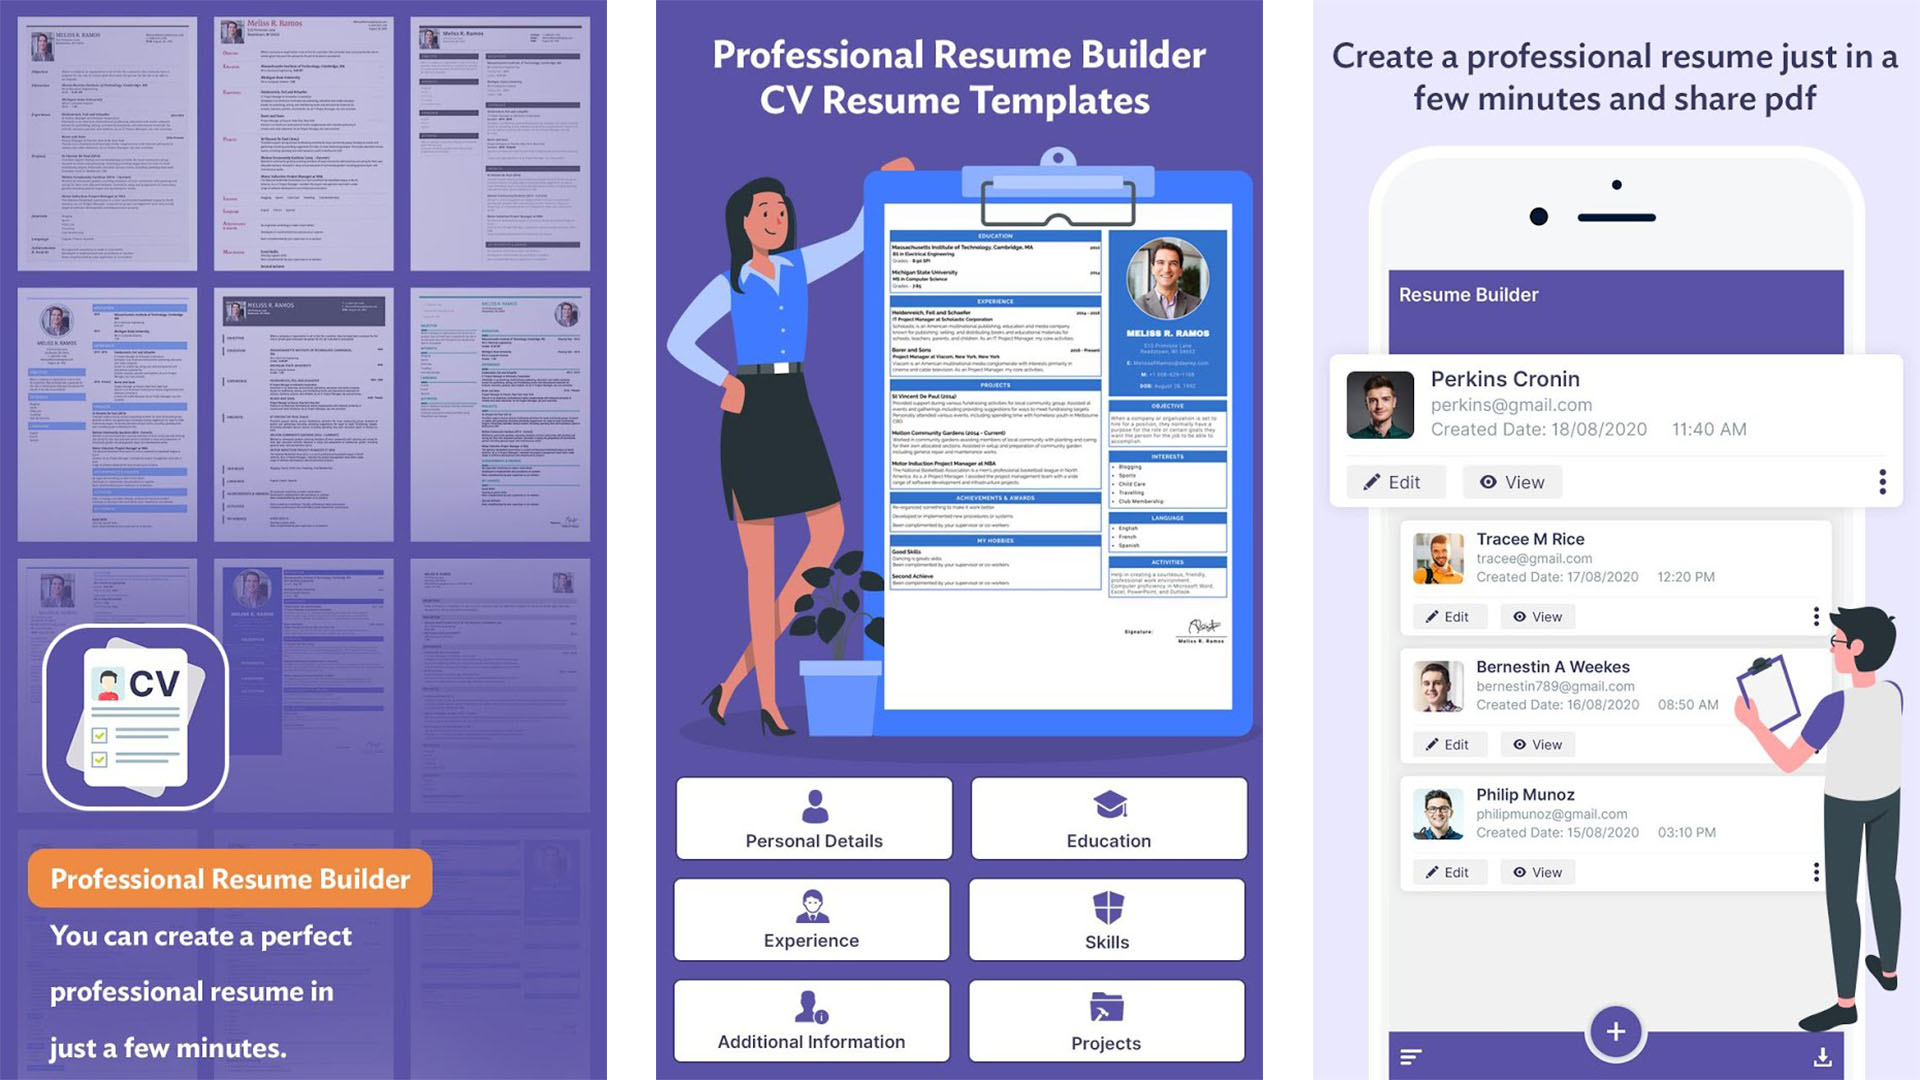 Professional Resume Builder screenshot 2021